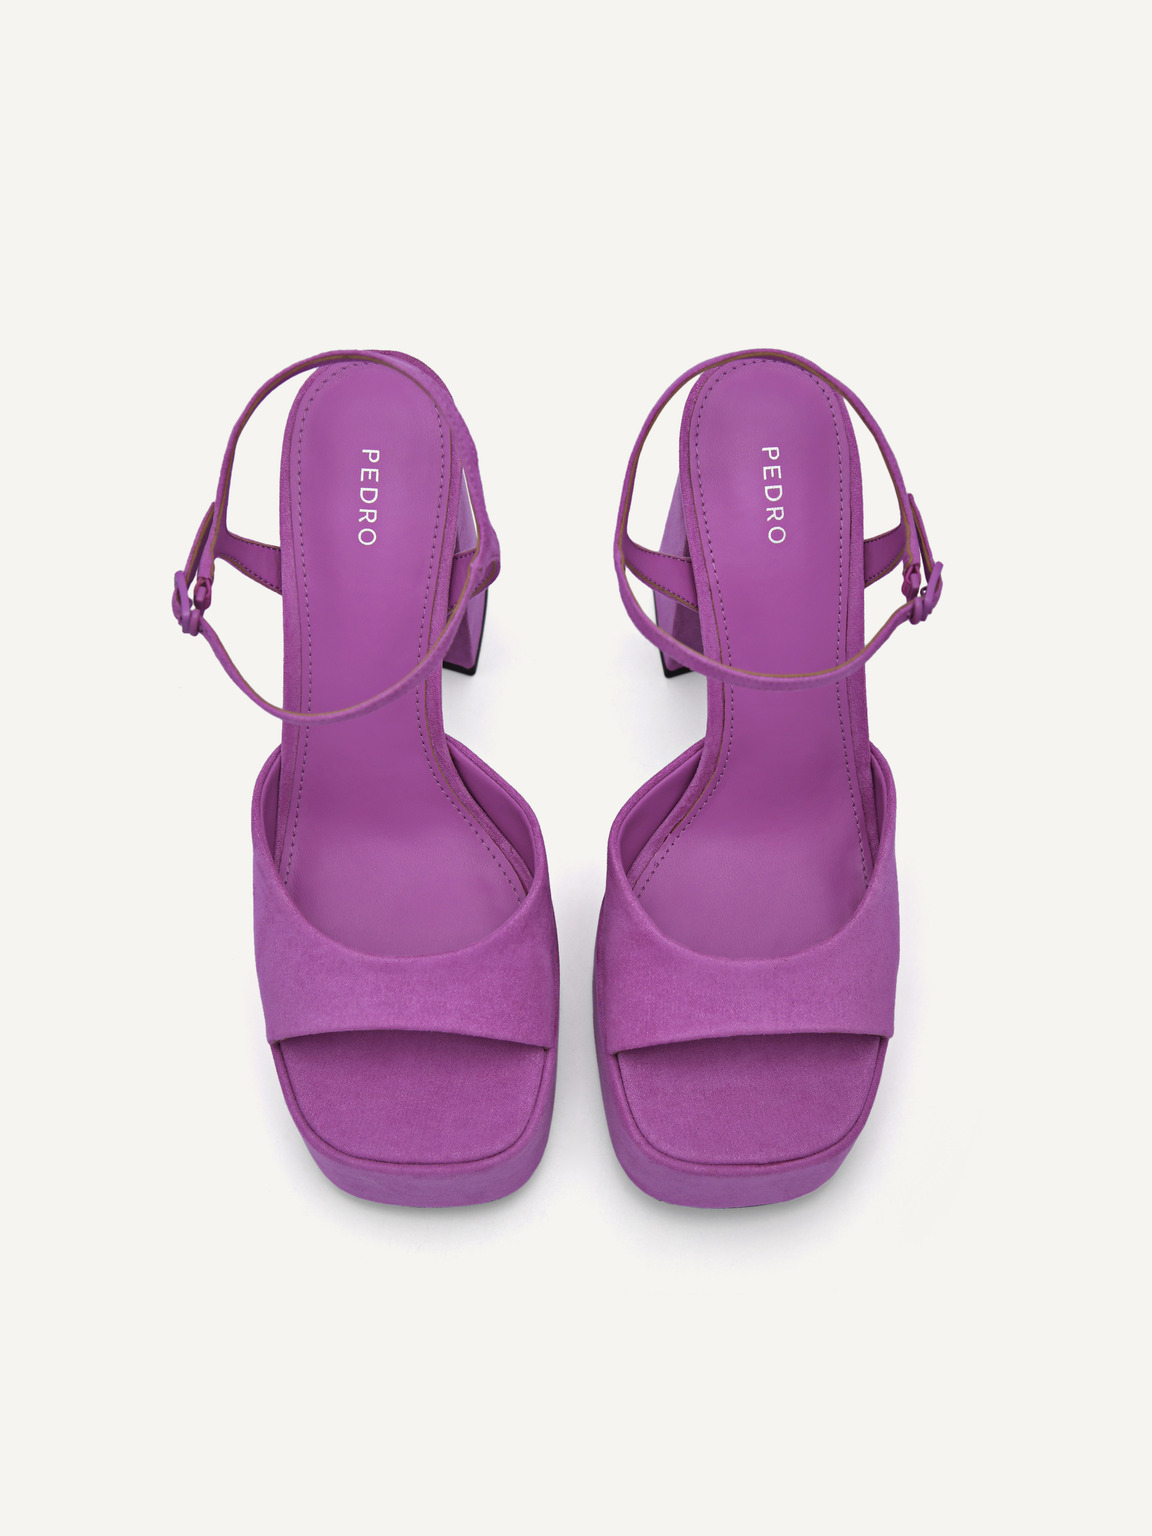 Selma厚底高跟涼鞋, 深紫红色